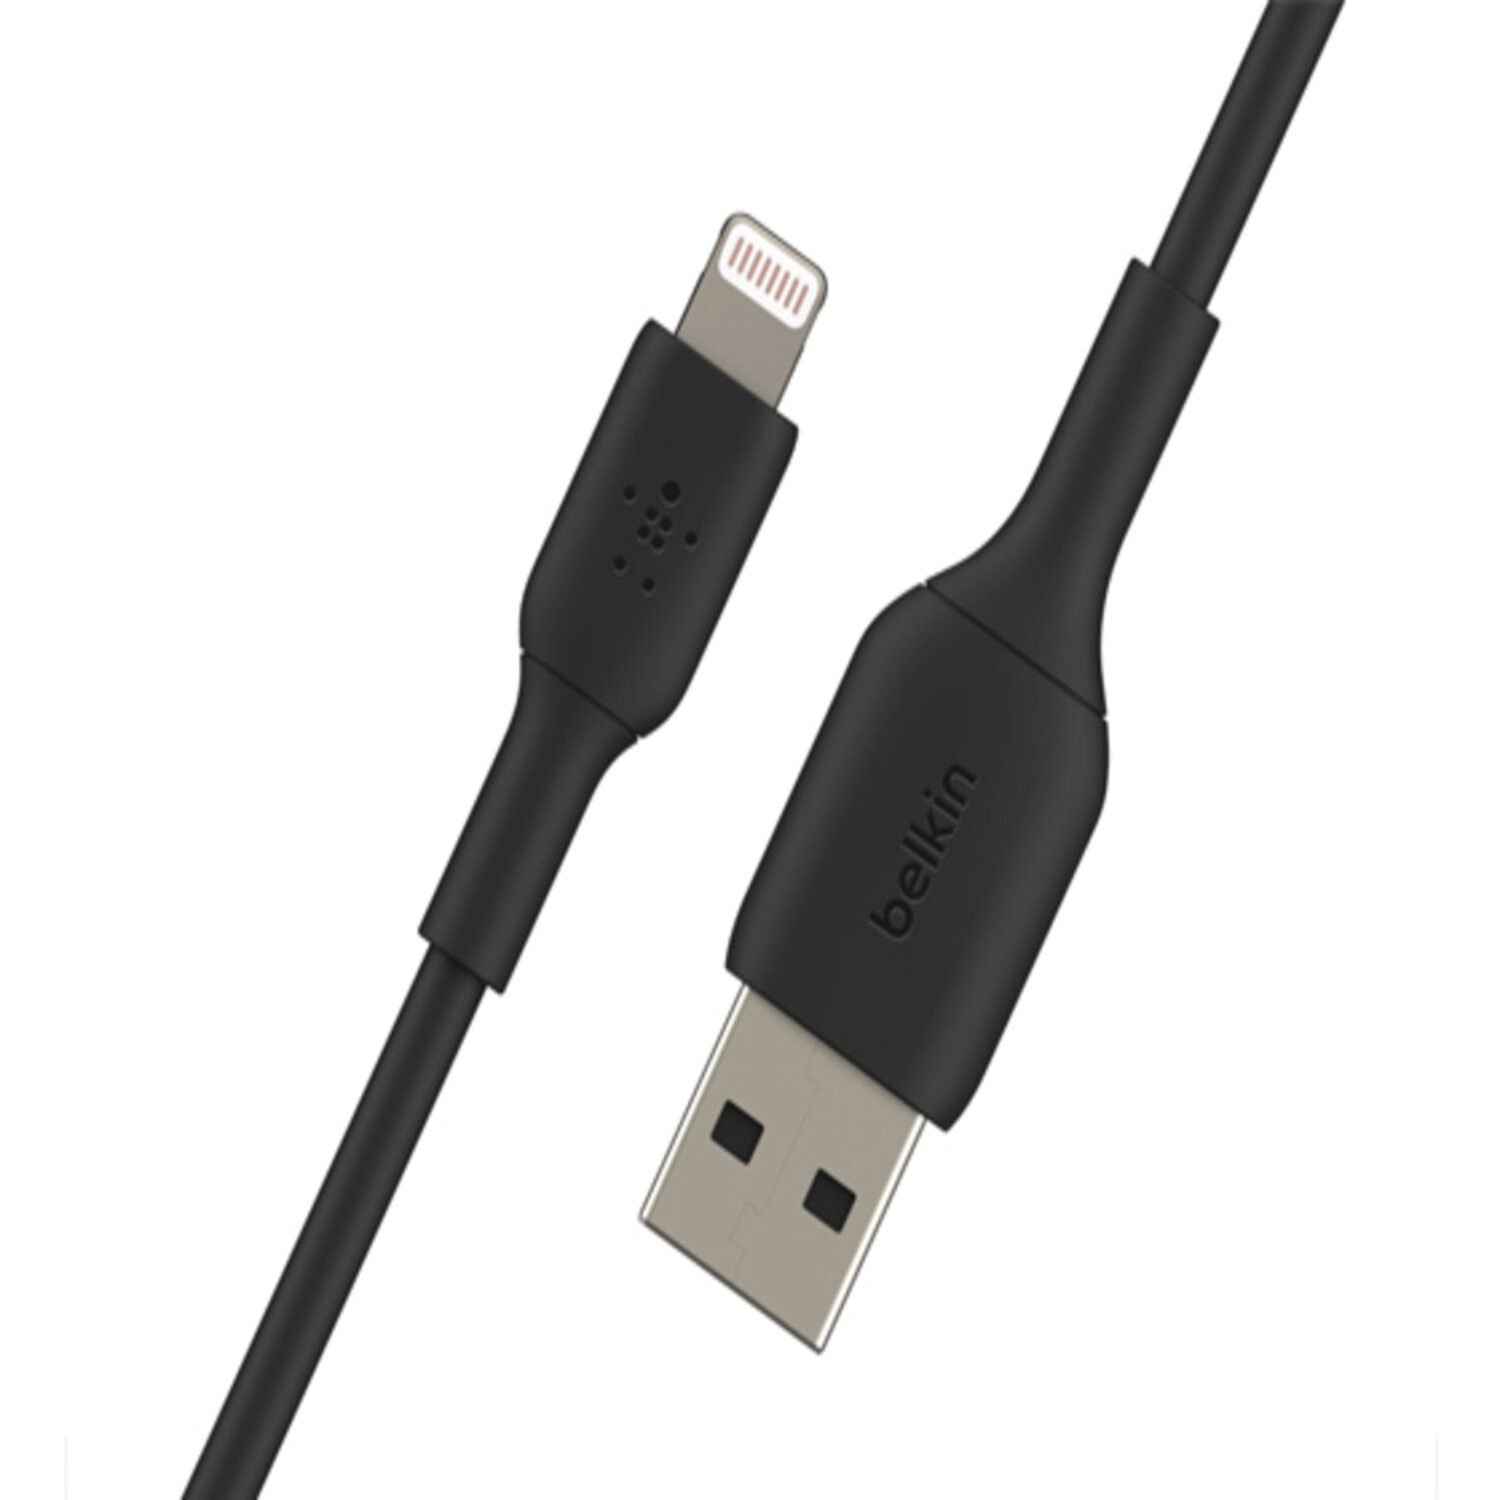  mophie Cable USB-A de carga rápida a USB-C - Cable 3M - Blanco  : Electrónica